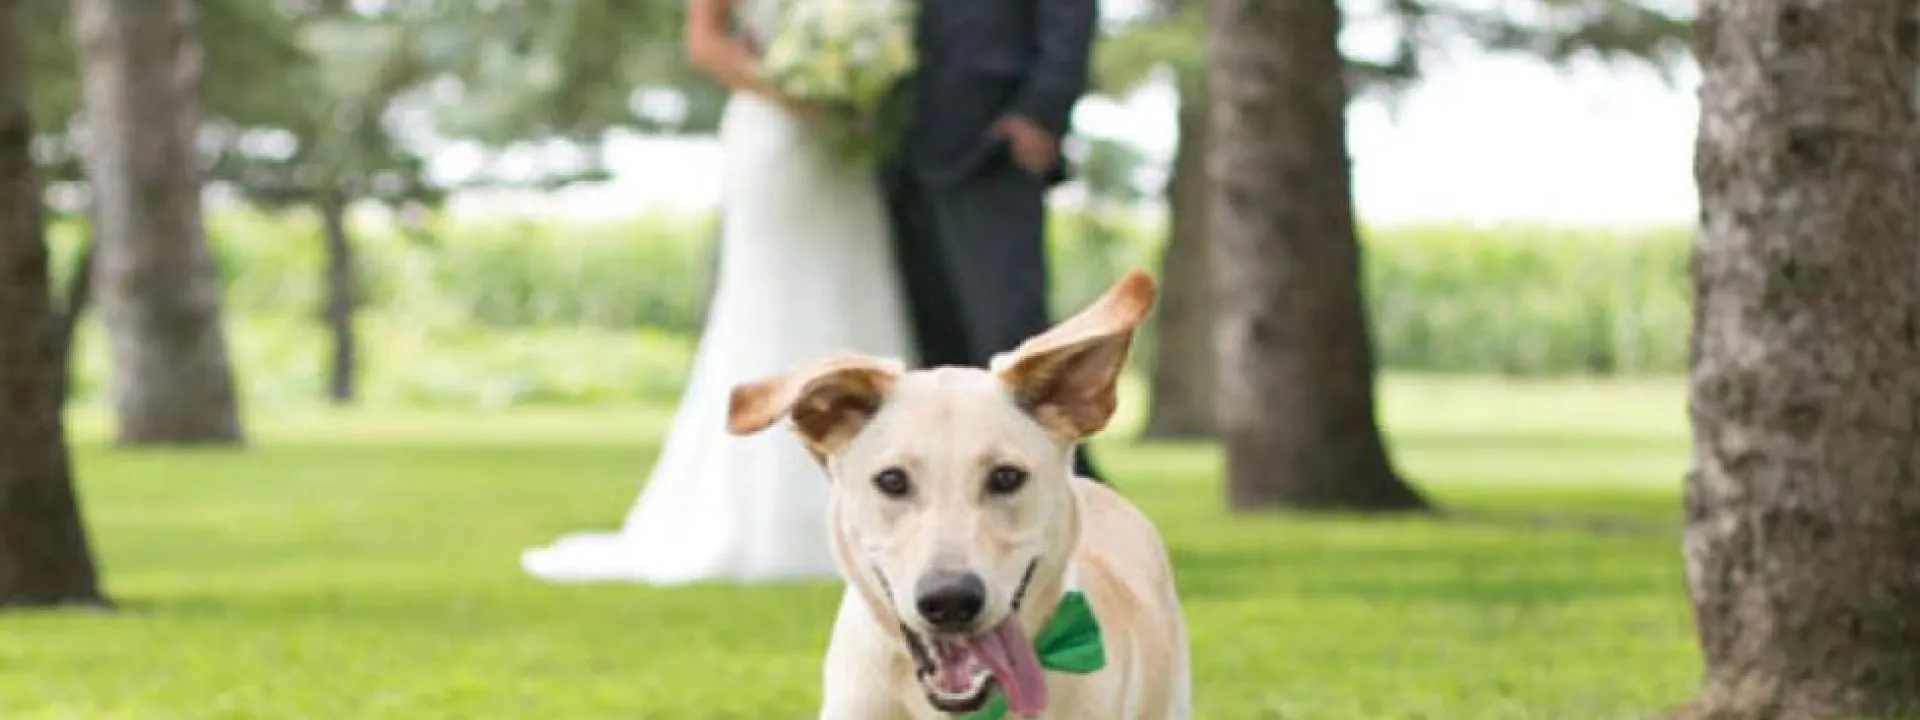 Minnesota Wedding Dogs